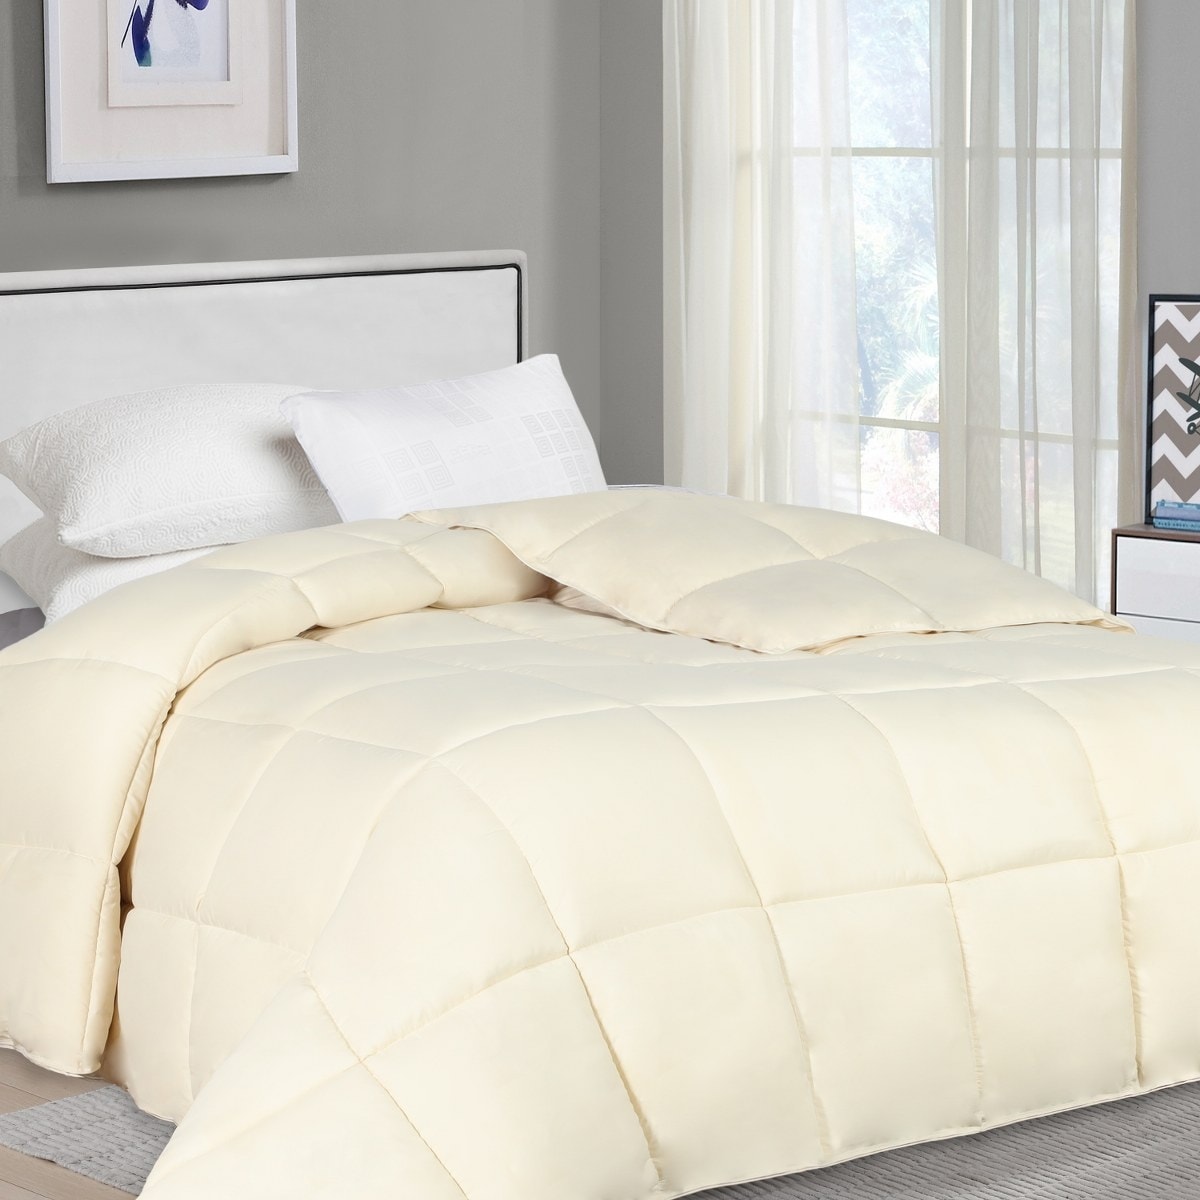 Utopia Bedding Queen Comforter Set with 2 Pillow Shams - Bedding Comforter  Sets - Down Alternative Navy Comforter - Soft and Comfortable - Machine